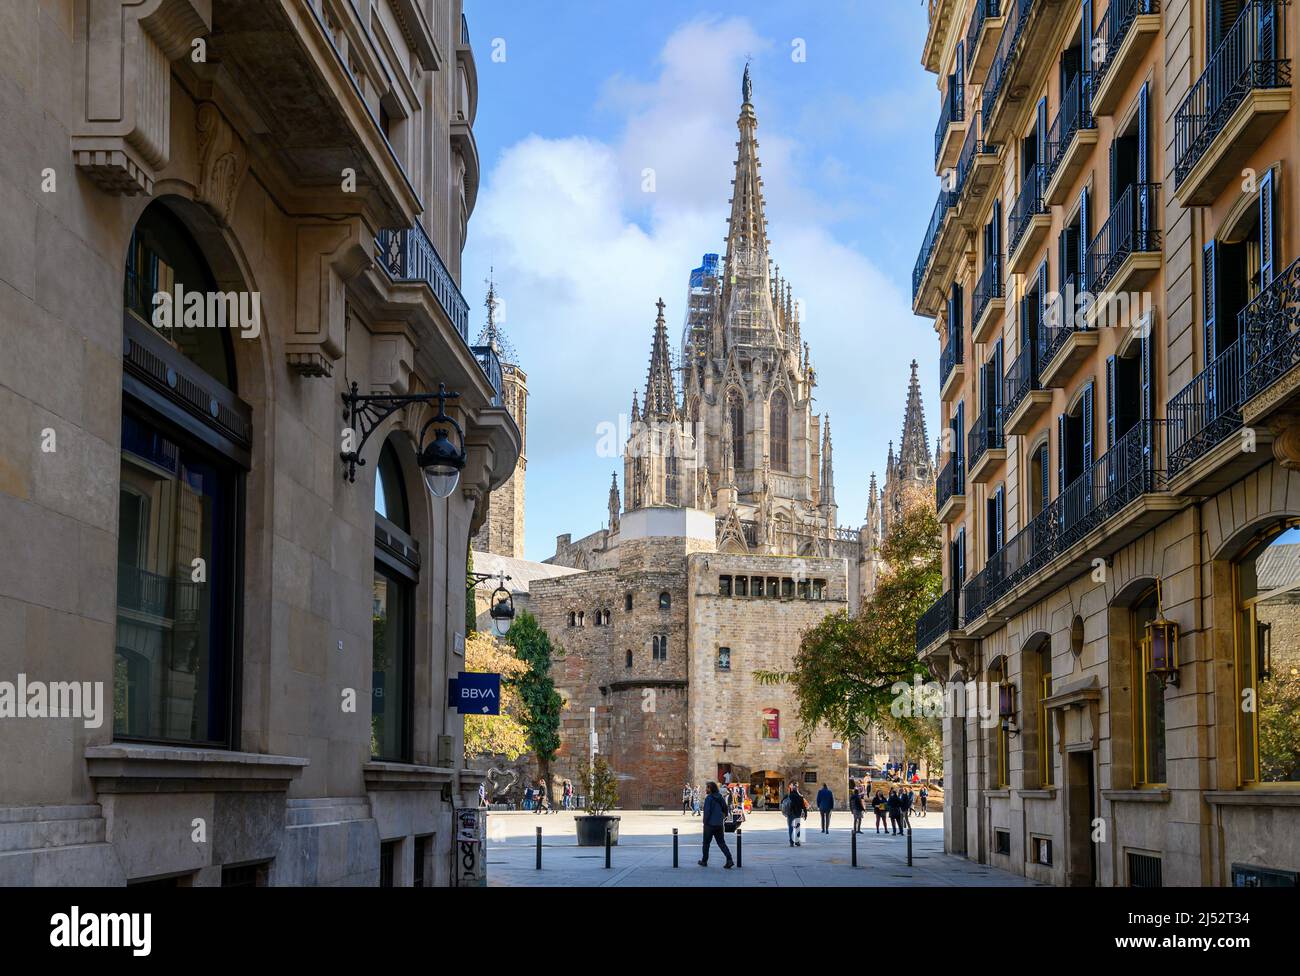 Barcelona, Spain. View of Barcelona Cathedral - Catedral de la Santa Cruz y Santa Eulalia (the Holy Cross and Saint Eulalia) Stock Photo